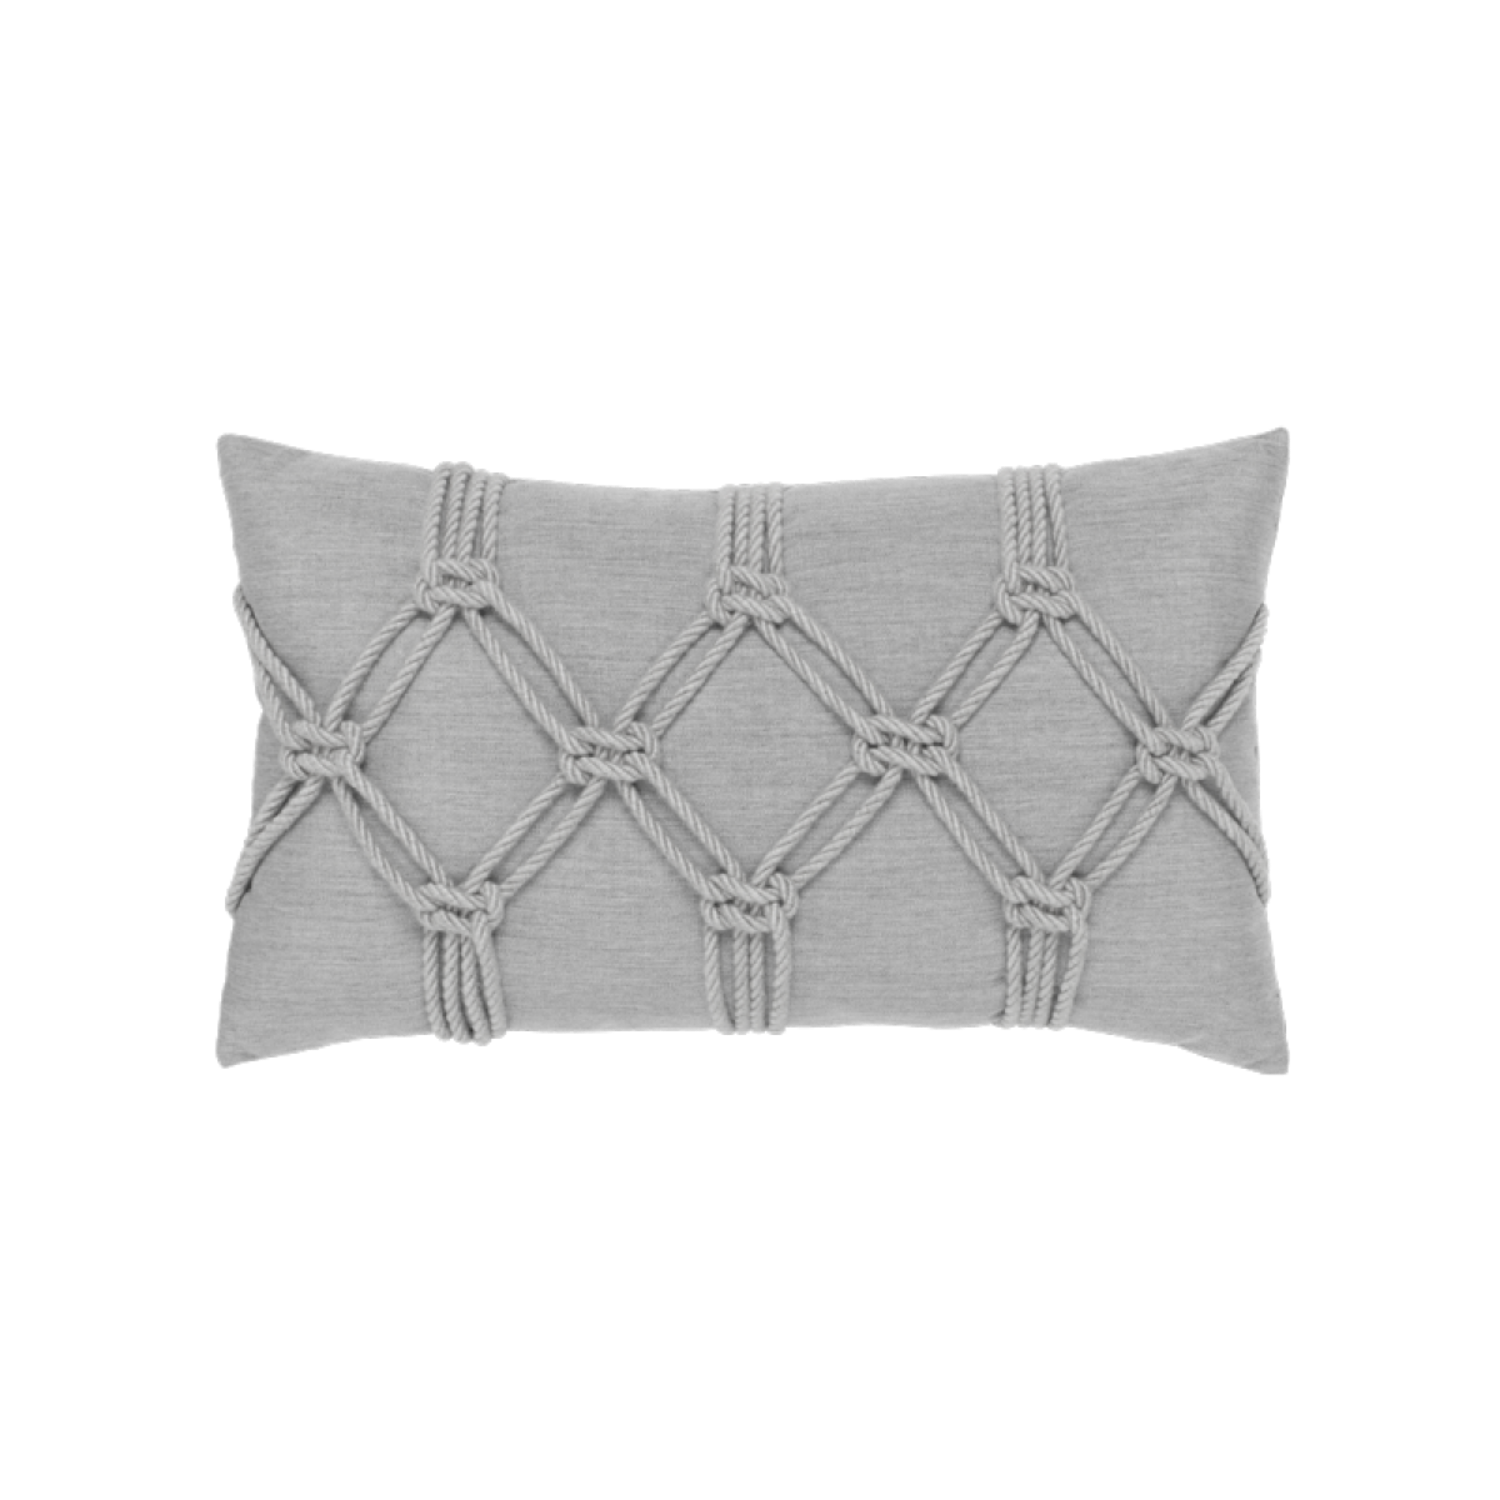 Elaine Smith 12" x 20" Lumbar Outdoor Pillow - Granite Rope - Polyester Fiber Fill Throw Pillows 12031011